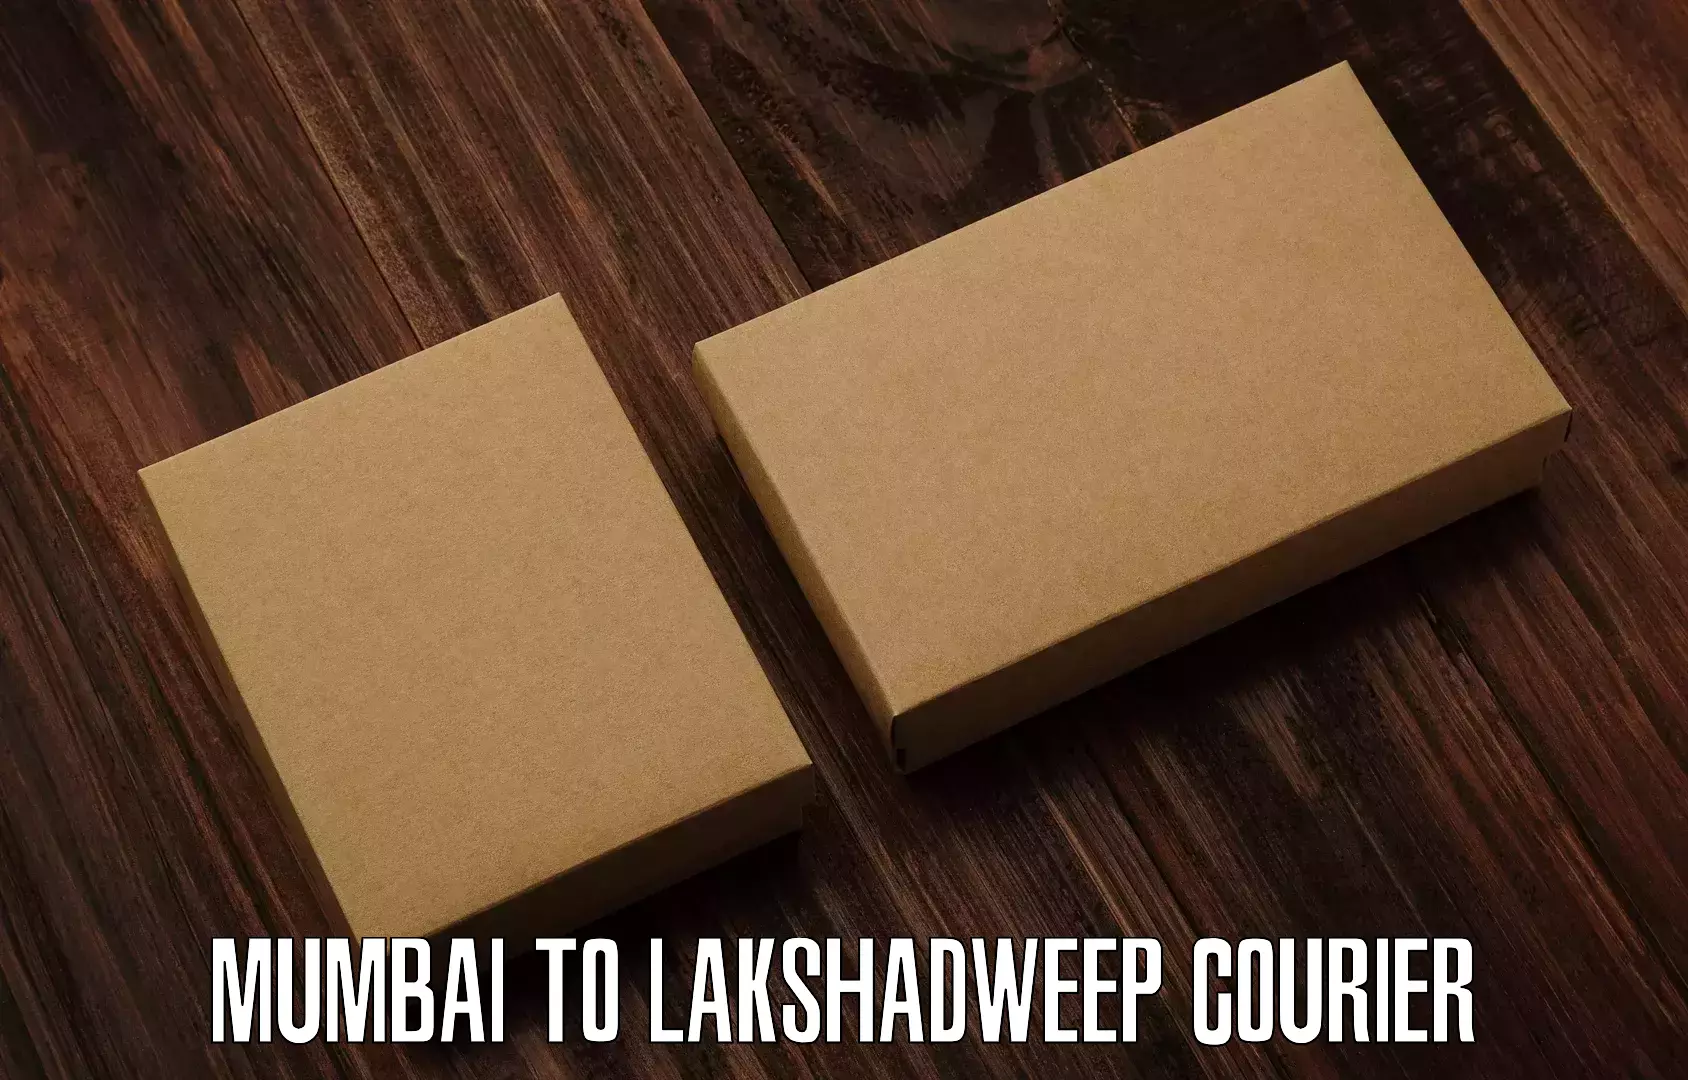 Express delivery network Mumbai to Lakshadweep